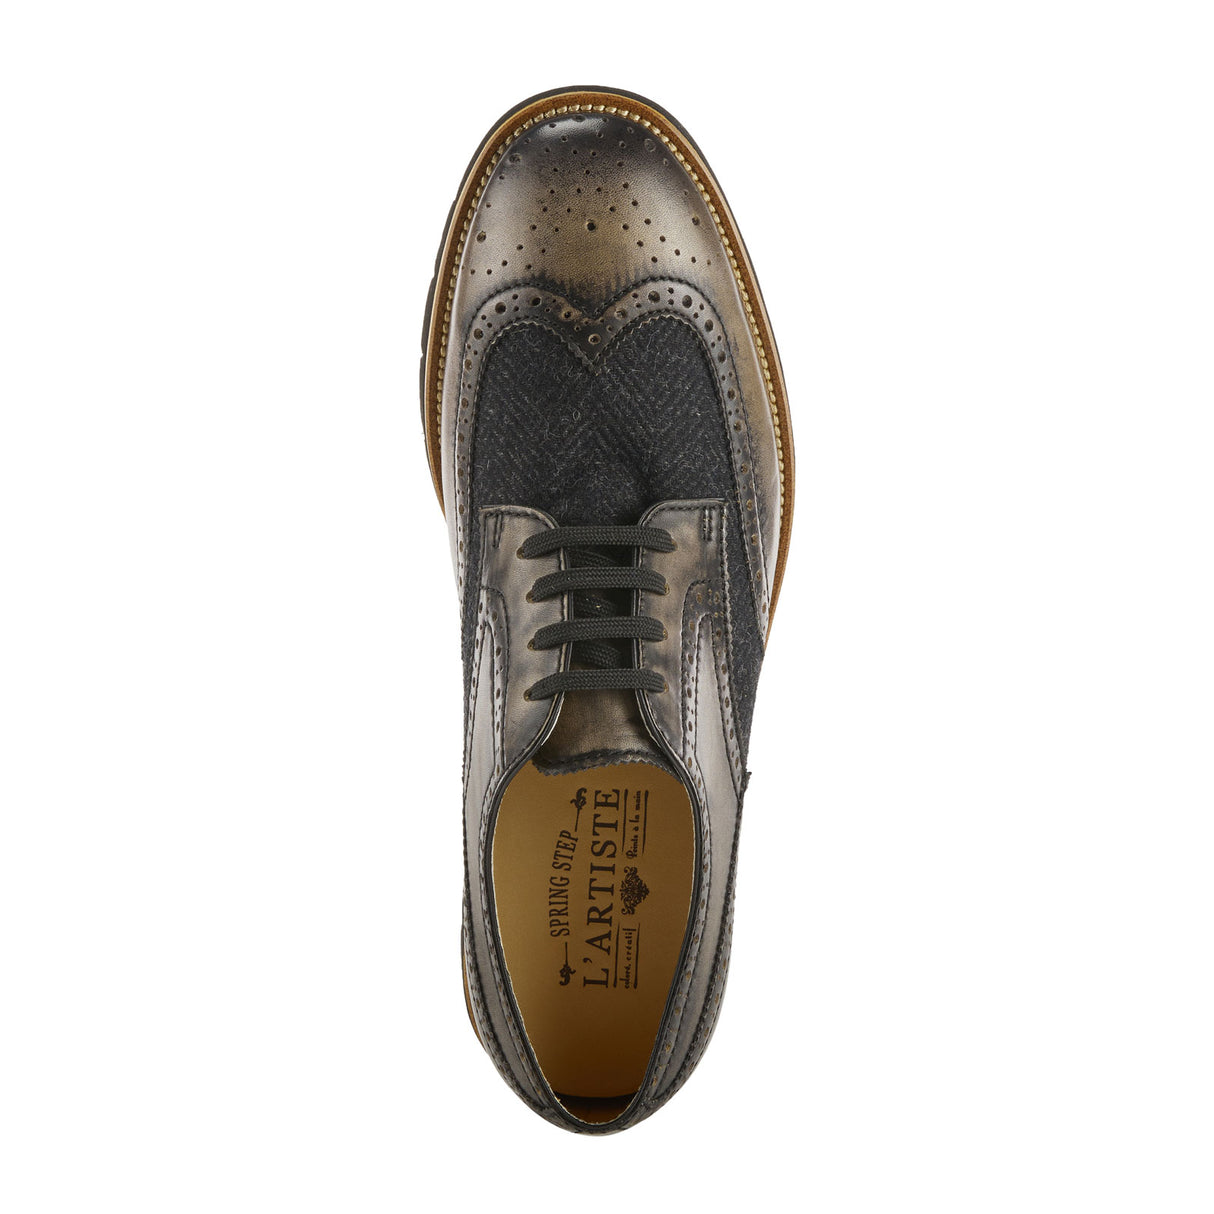 L'Artiste Beaufort Oxford (Men) - Black Leather Combo Dress-Casual - Oxfords - The Heel Shoe Fitters